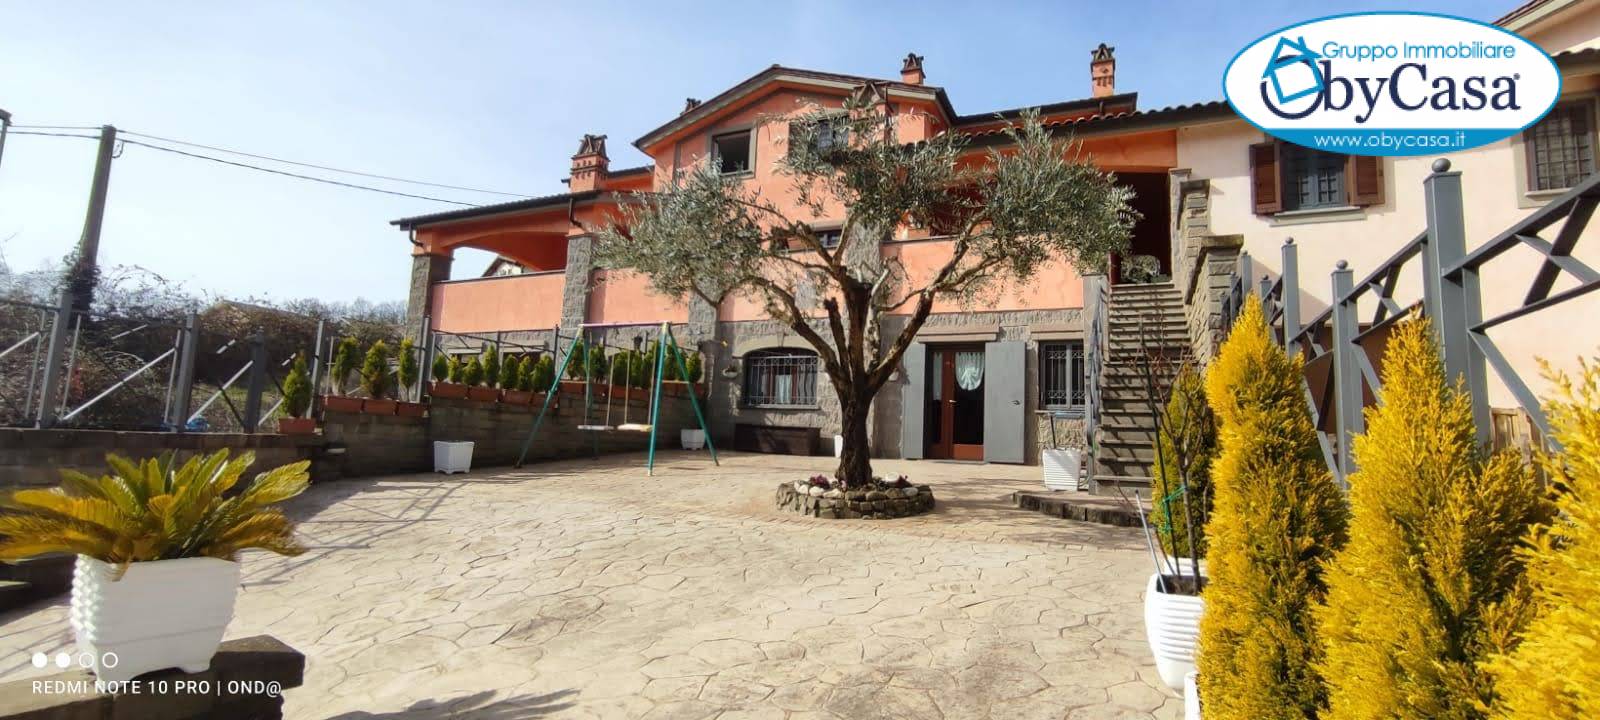 Villetta in vendita a Pisciarelli, Bracciano (RM)